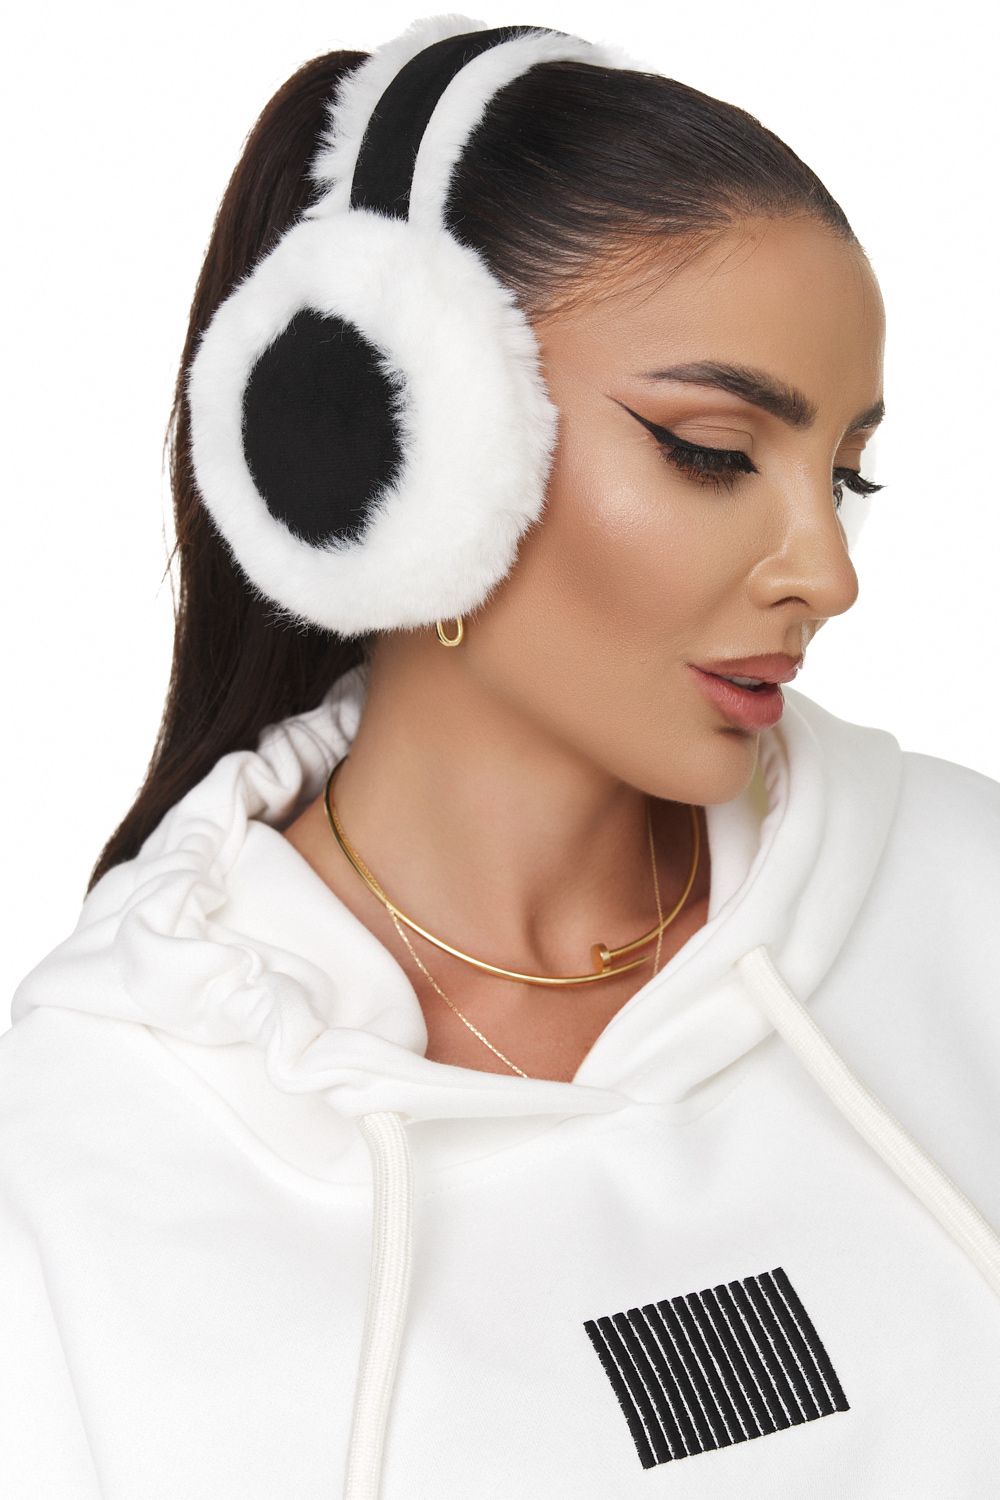 Segrila Bogas black white ear protection earphones